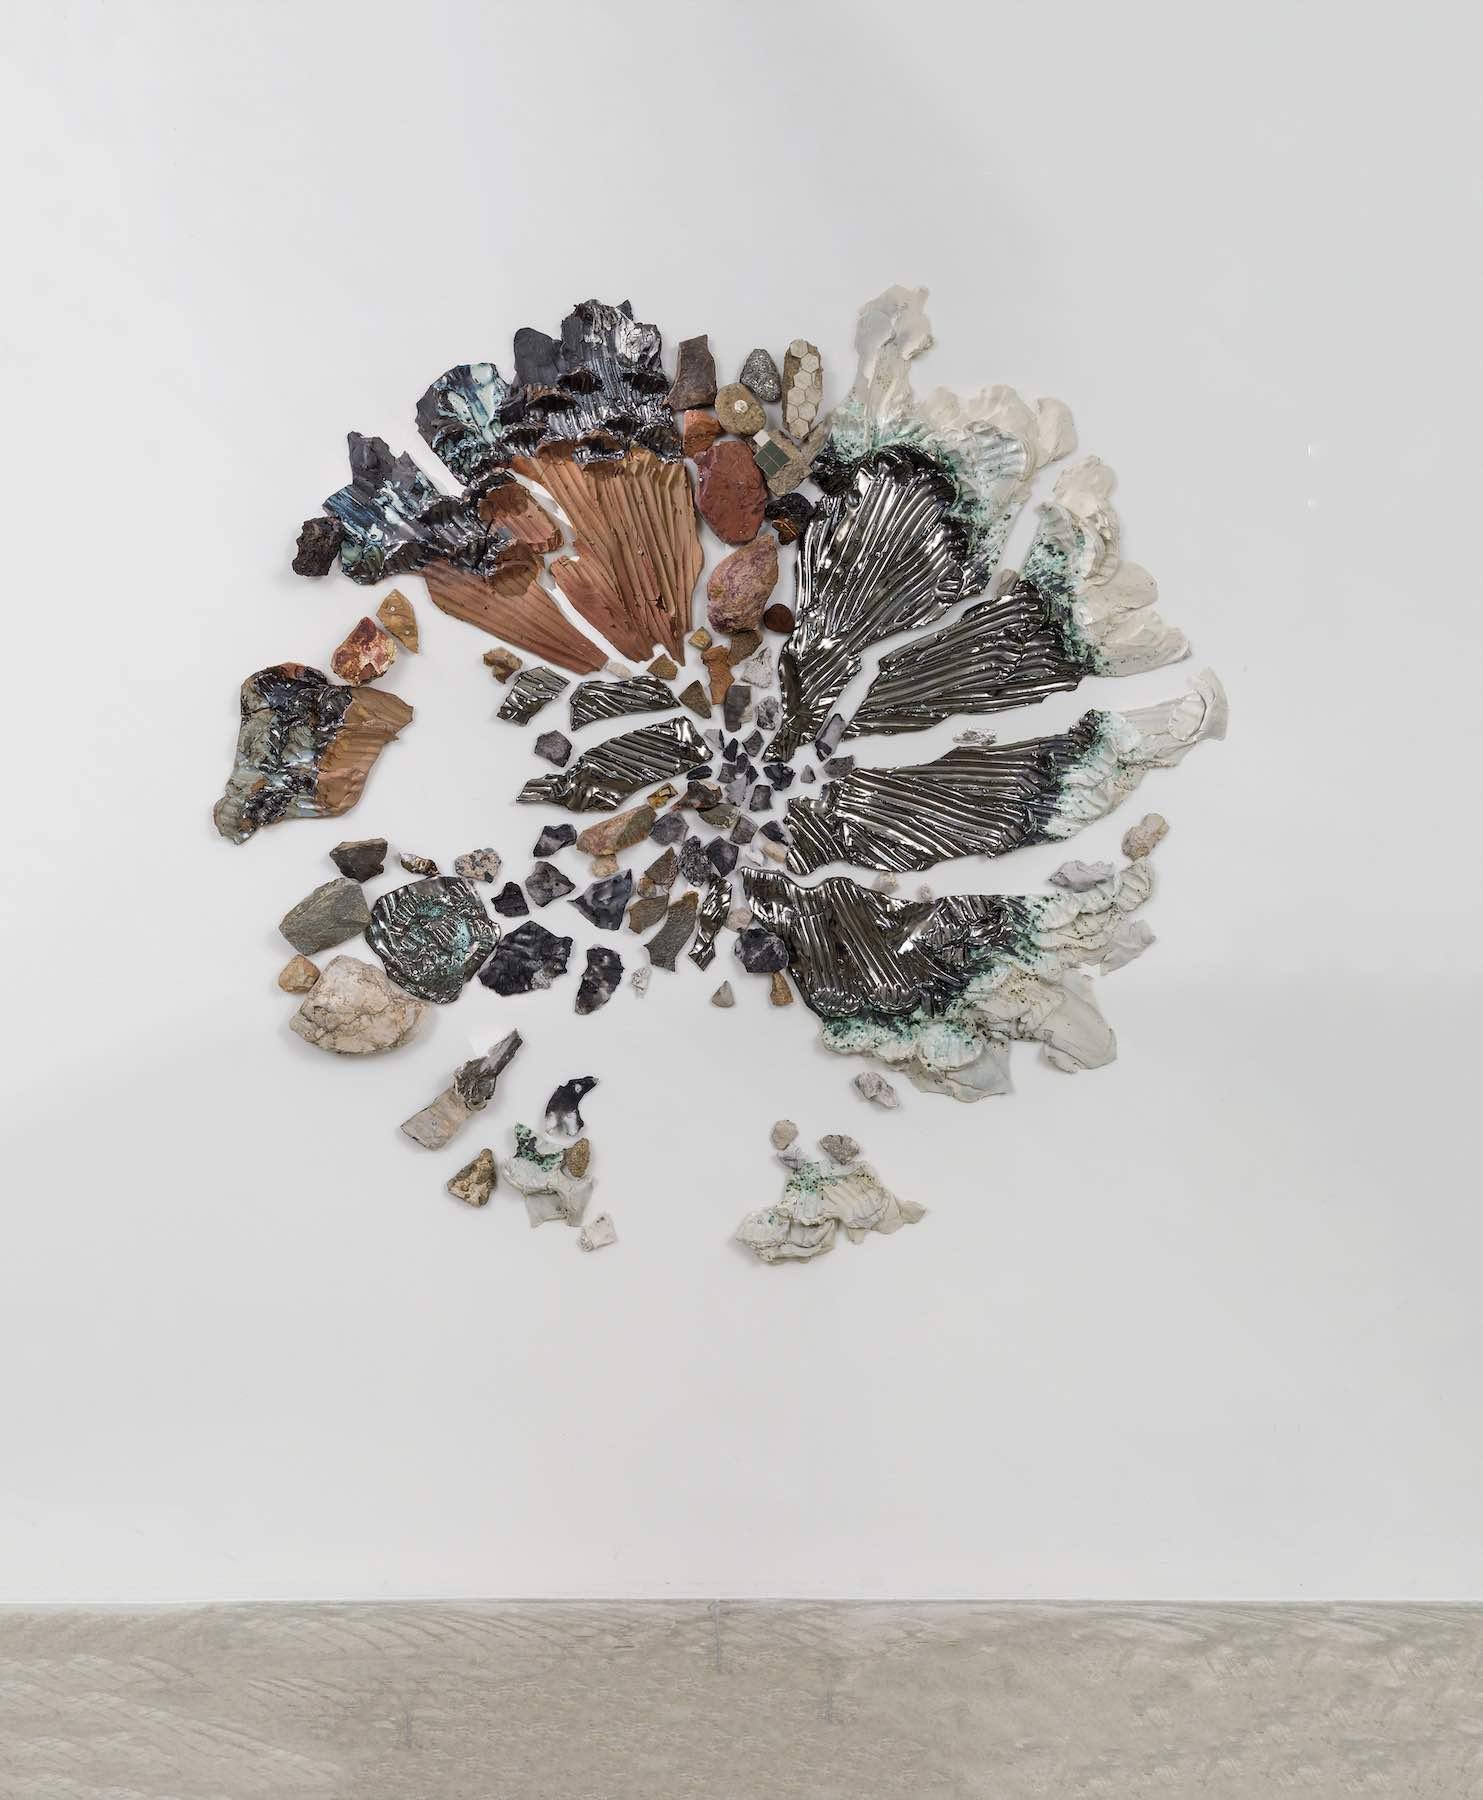 Brie Ruais [b. 1982] Falling Apart, Holding Together, 2021. Stoneware, glaze, found rocks, cement rubble. 60 x 60 x 3 inches, 152.5 x 152.5 x 7.5 cm. Courtesy the artist and albertz benda, New York. Photo- Stefan Hagen 2